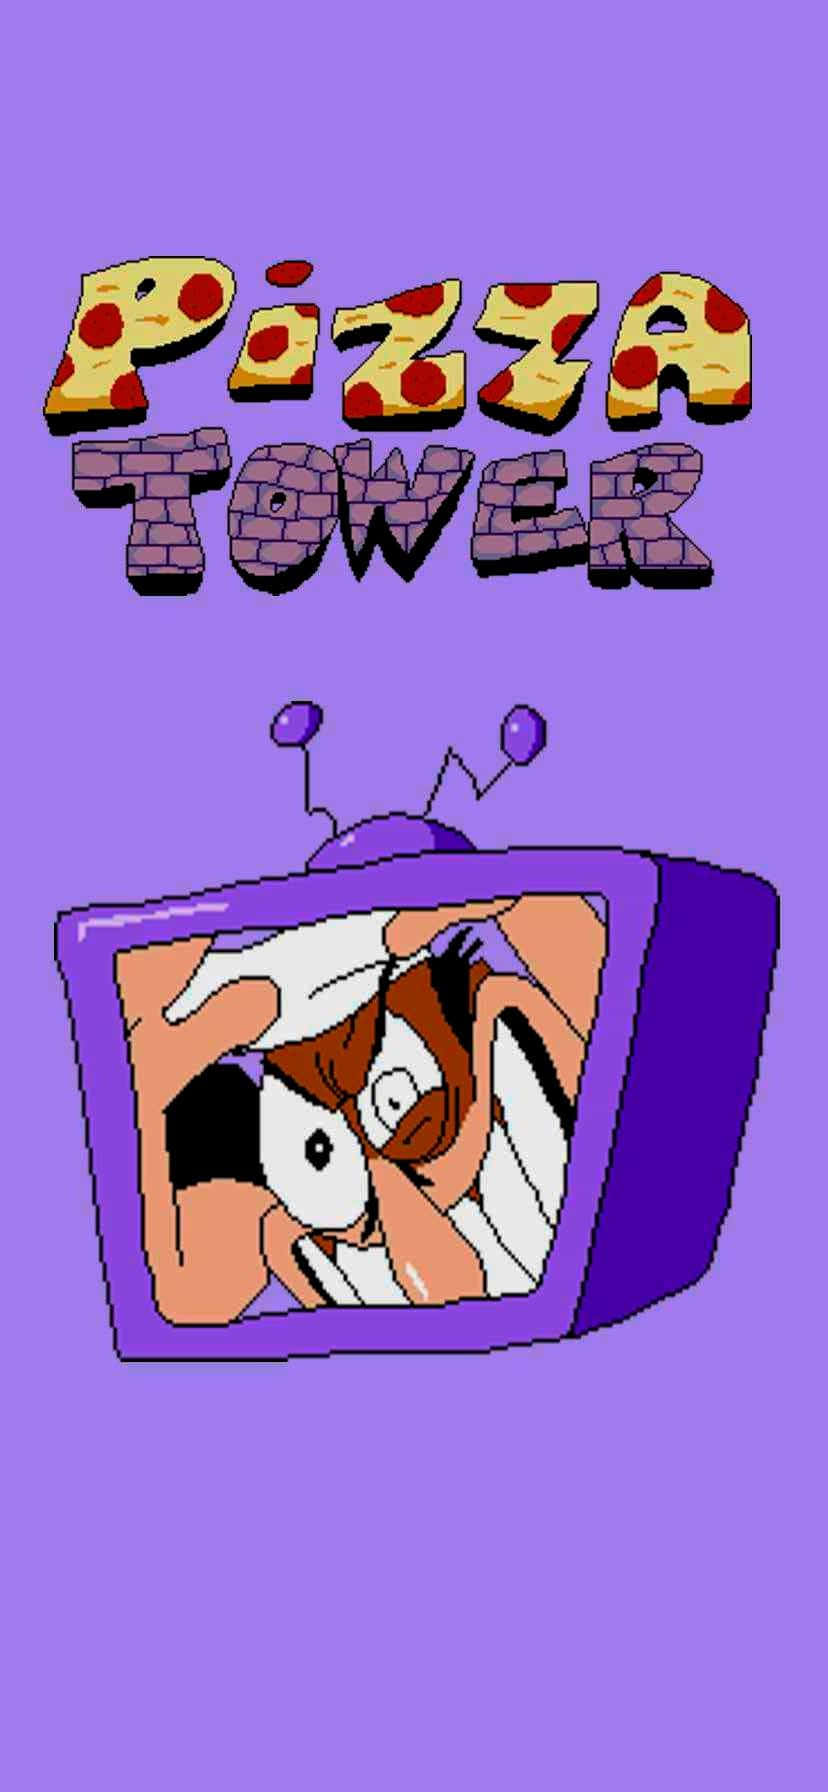 Pizza Tower Game Art Wallpaper